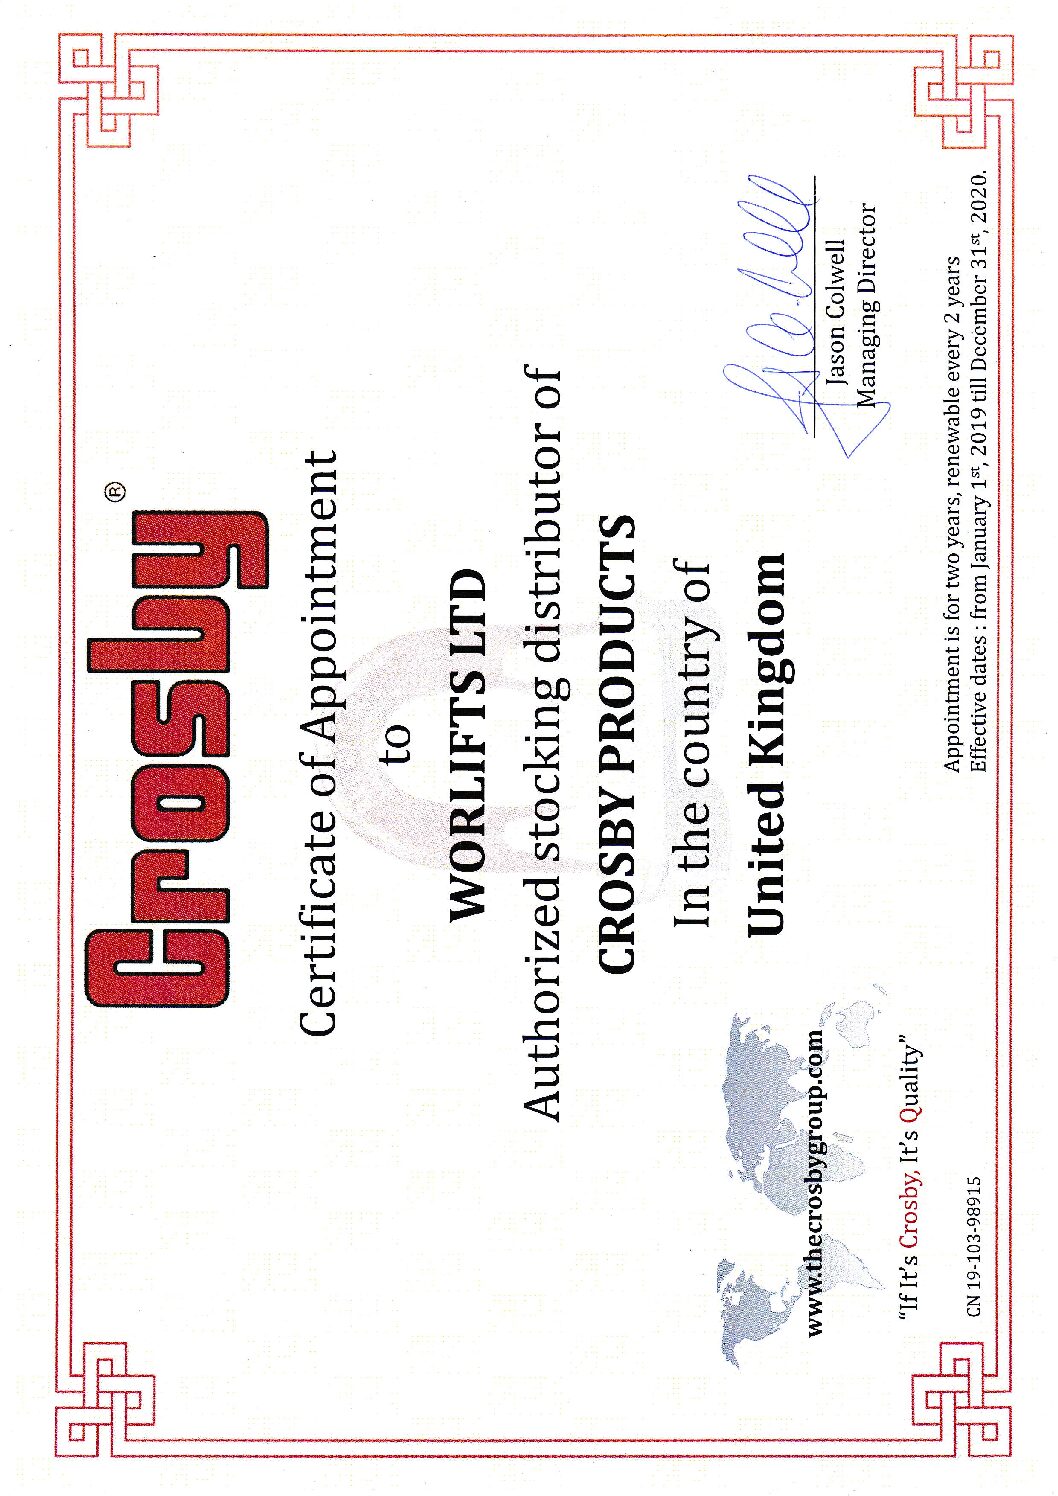 Crosby Certificate Expiry 31 12 20 pdf